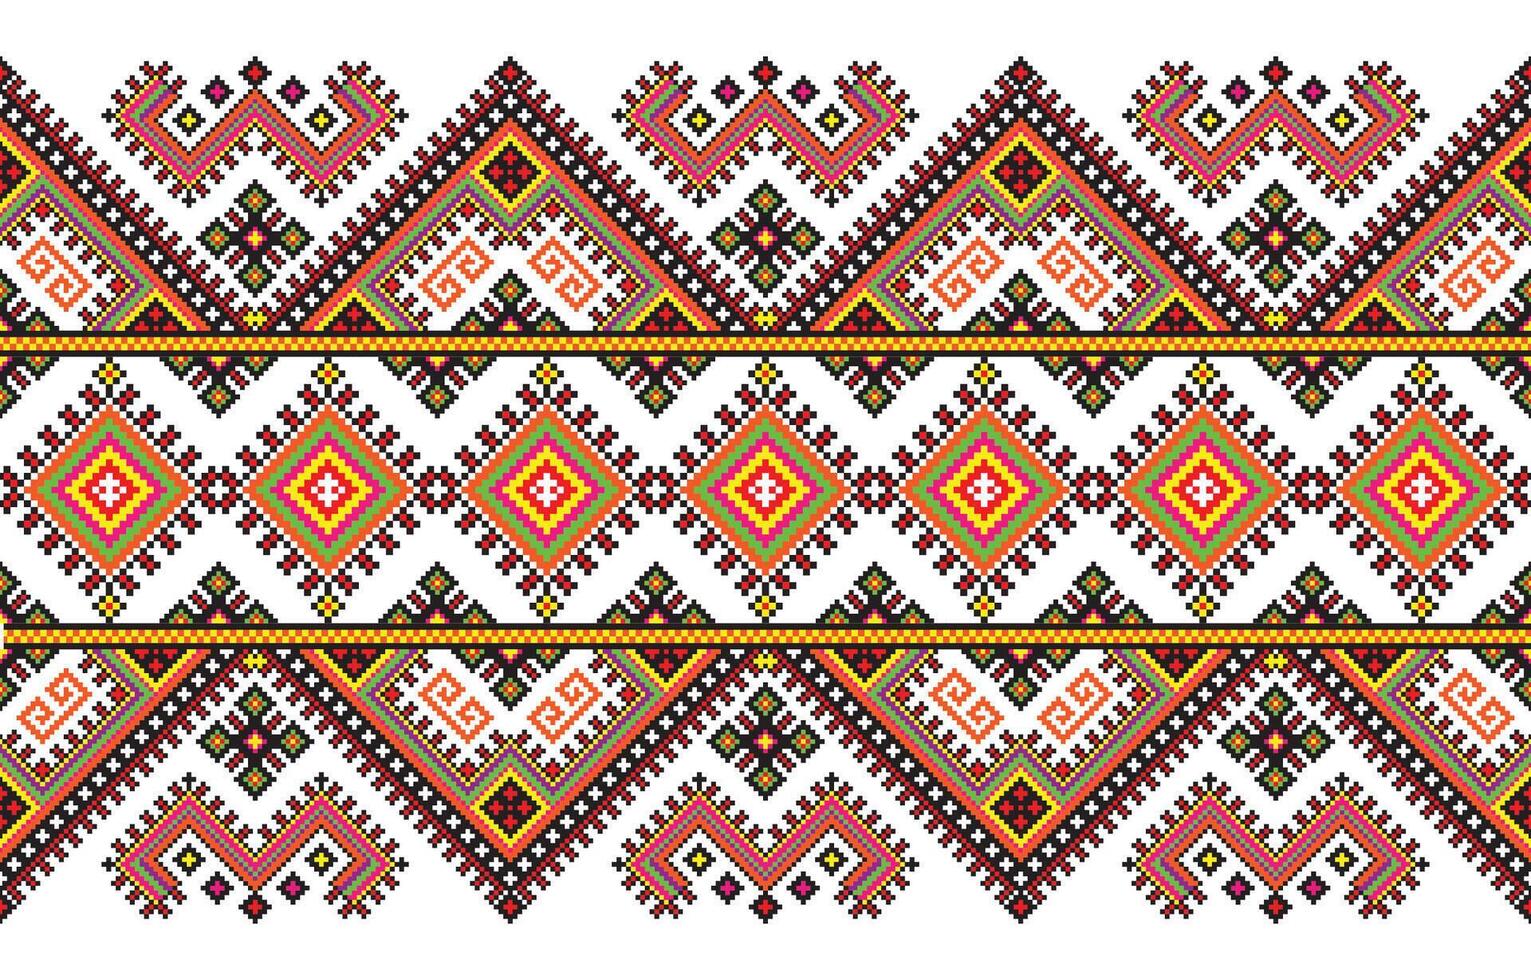 Cross stitch fabric geometric pattern seamless design for squares,diamonds,fabric,boho,carpet,fabric,ikat,tribal,batik,vector,illustration,pattern,embroidery,retro,ukrainian,zigzag,seamless vector